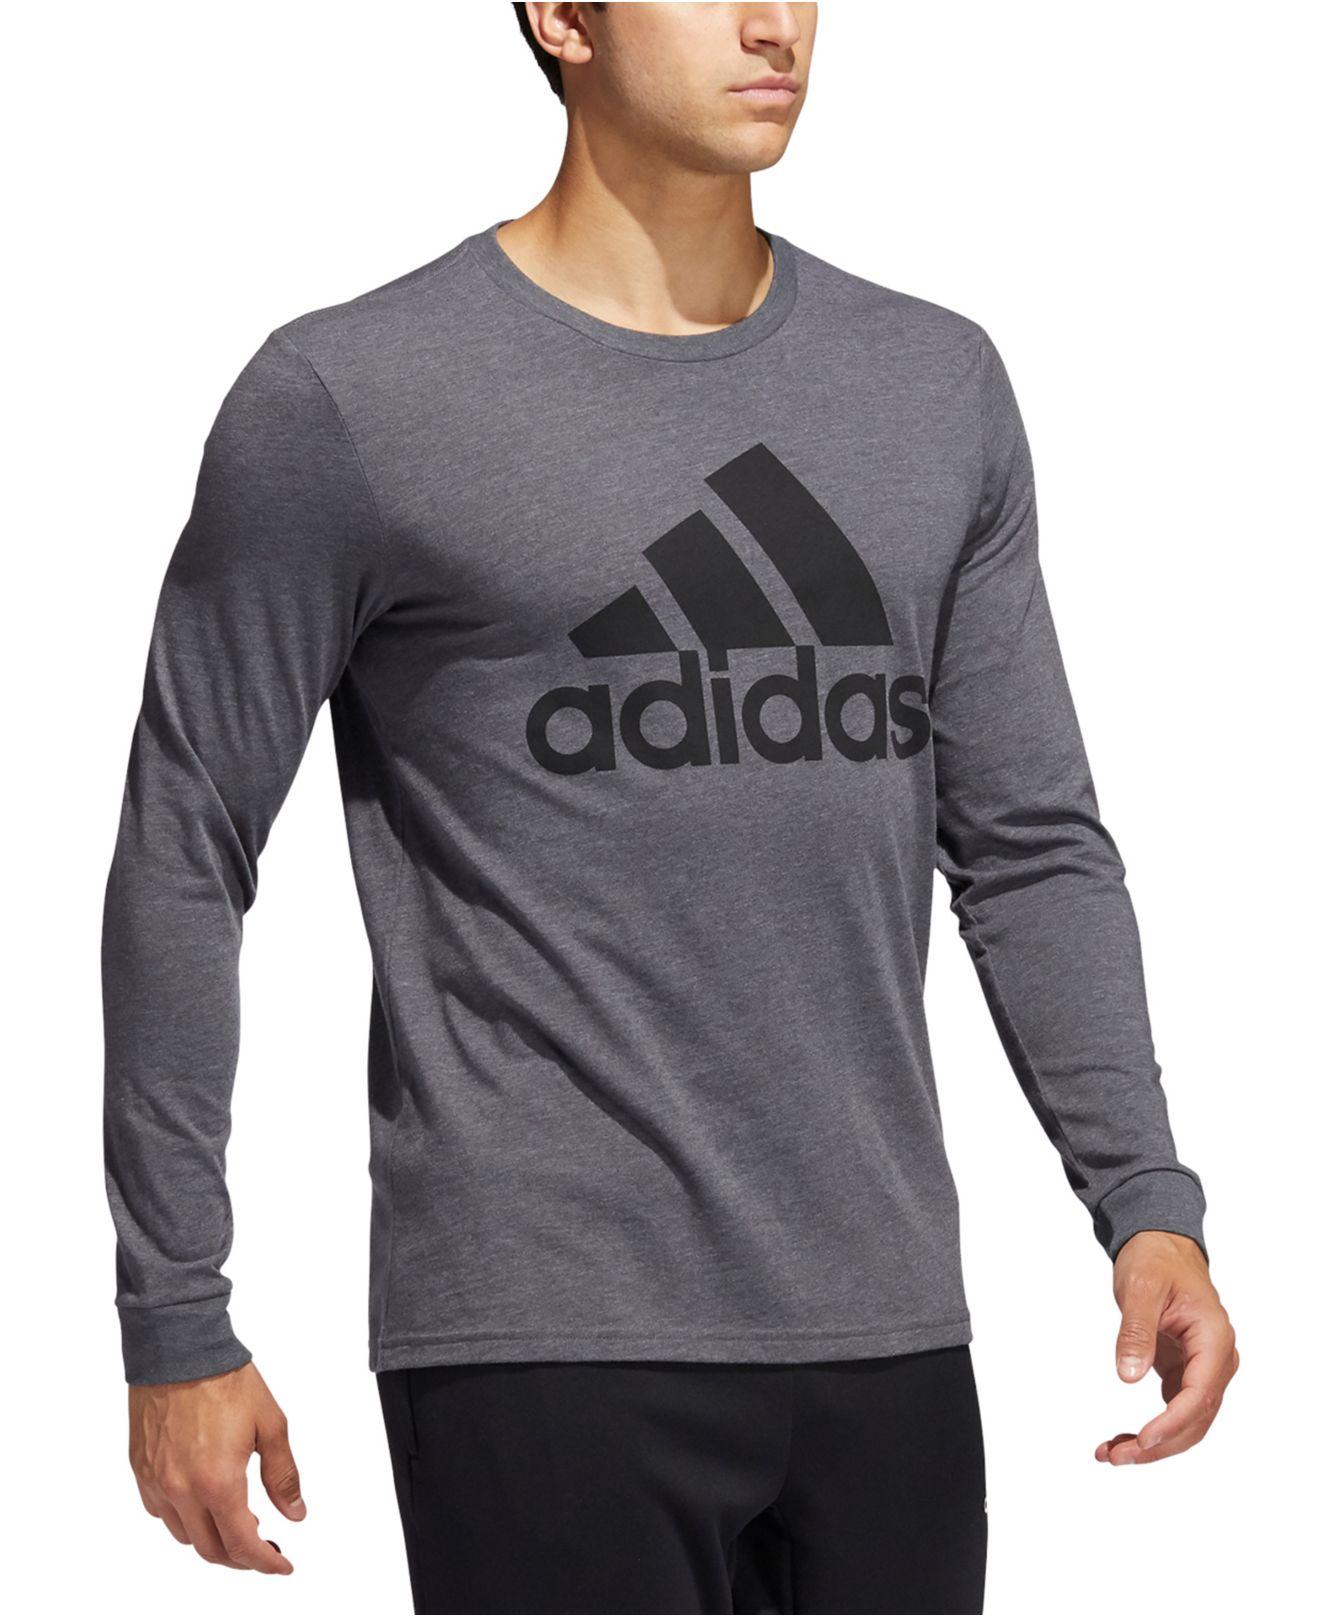 adidas Cotton Logo Long-sleeve T-shirt in Dark Grey Heather (Gray) for